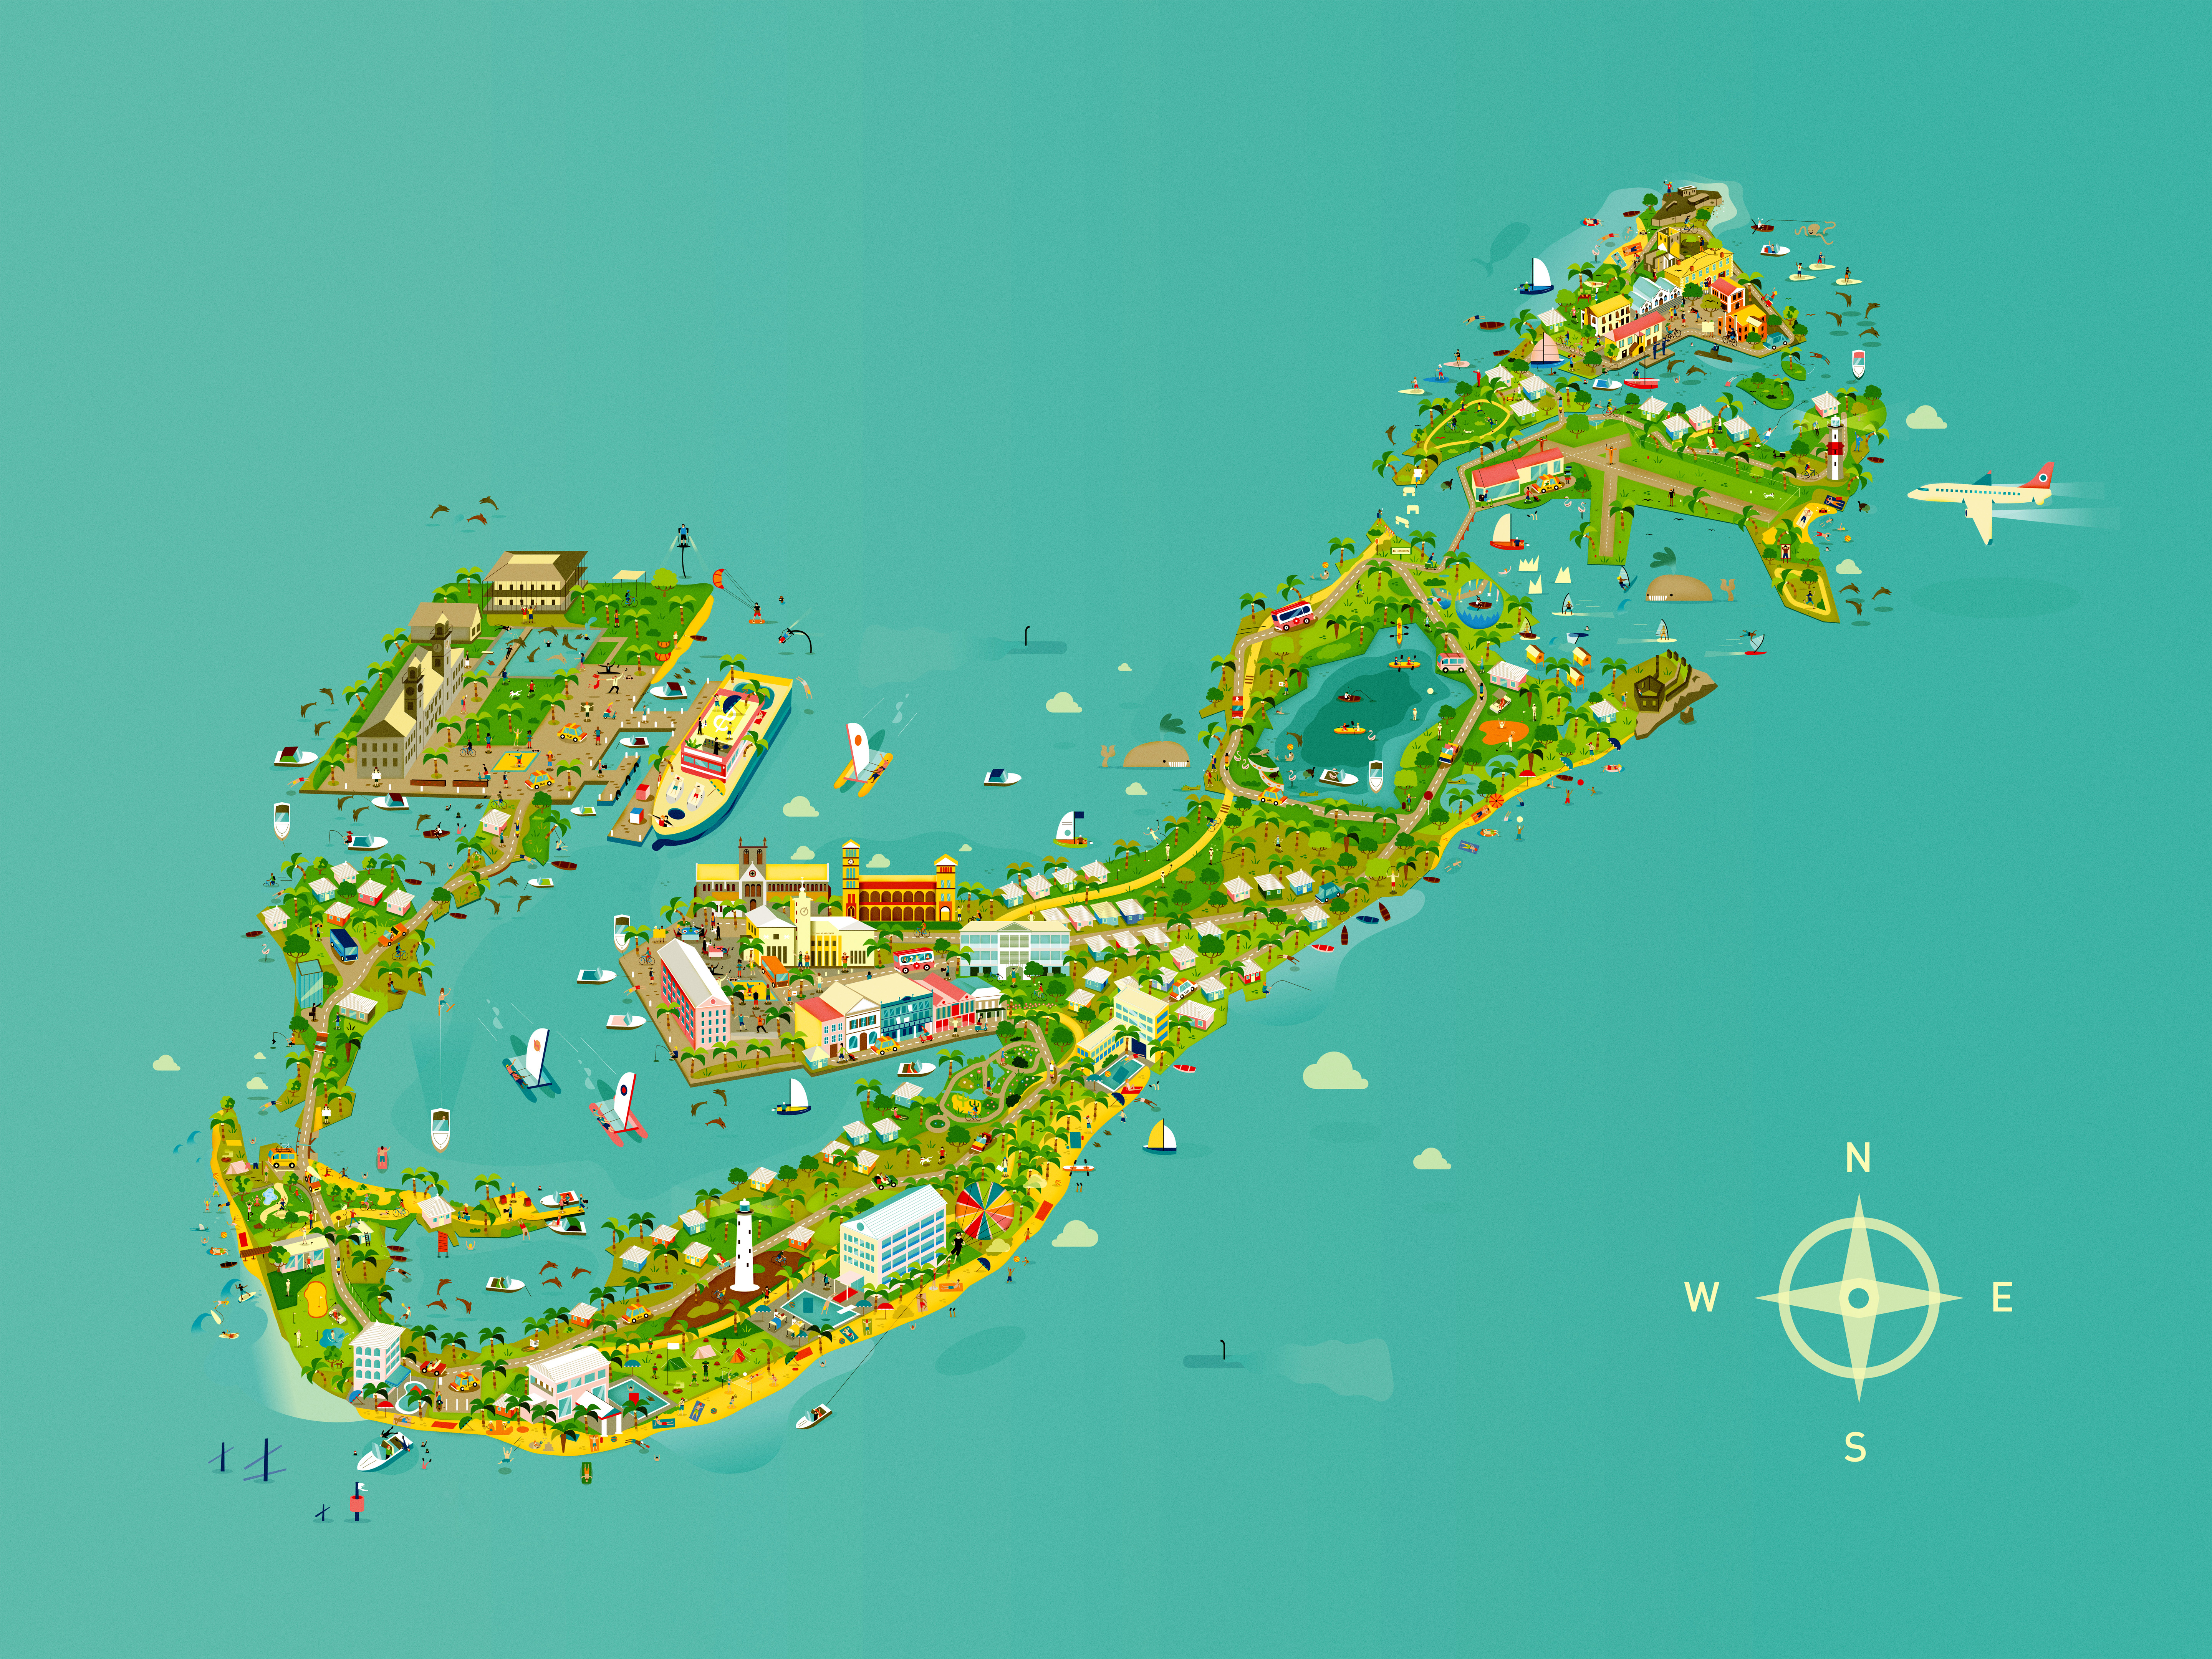 Bermuda tourist map of island